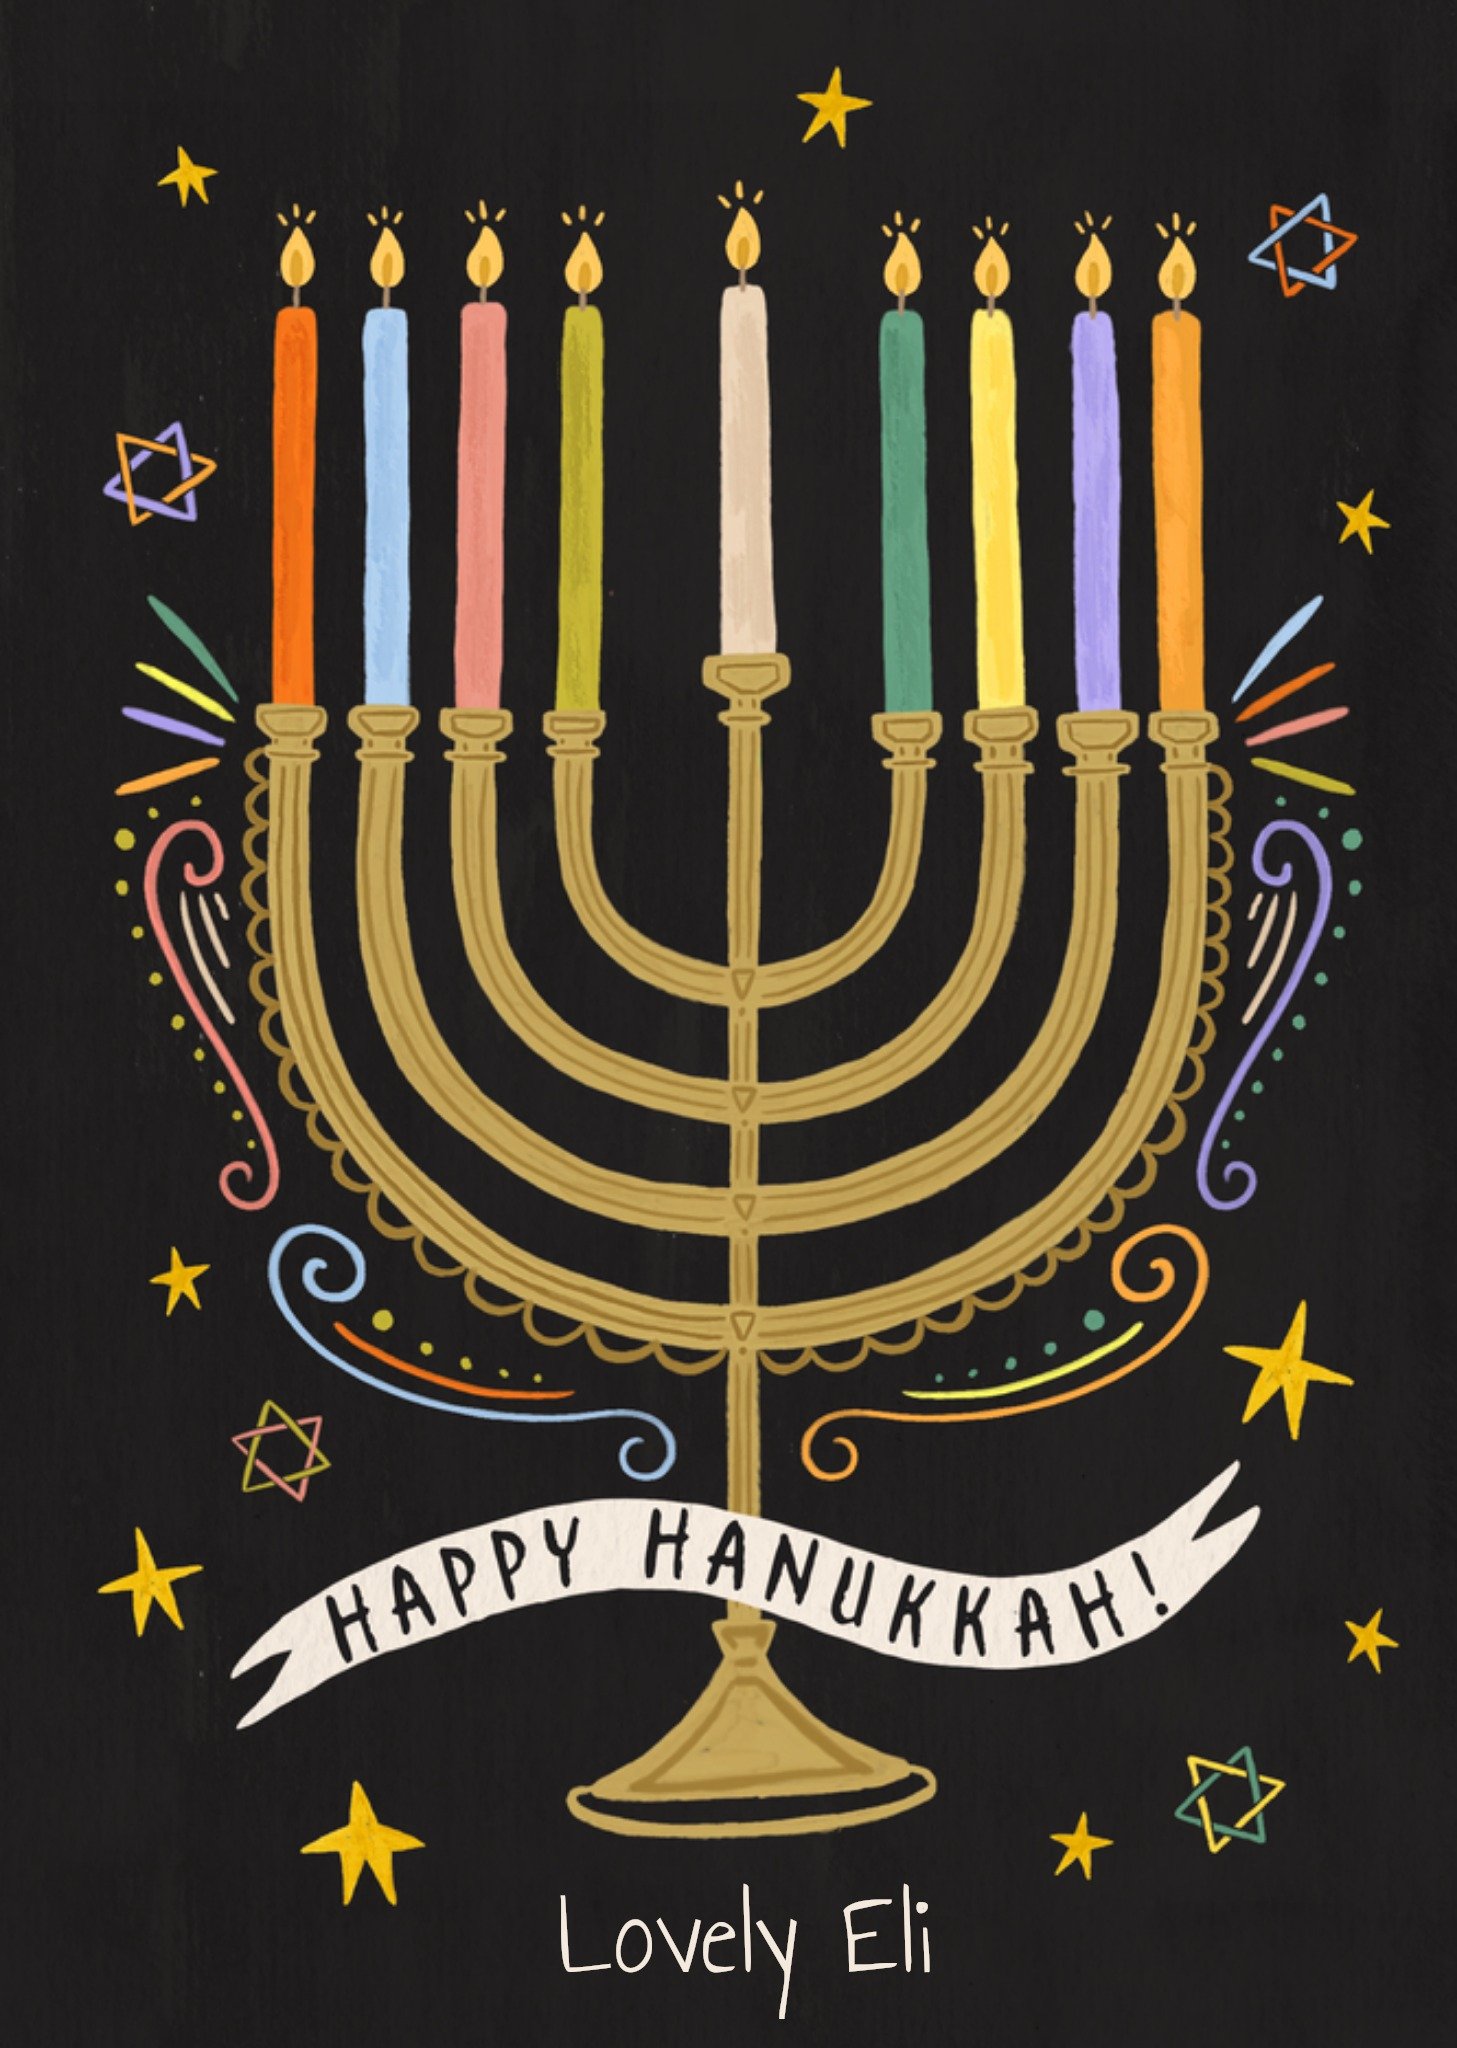 Moonpig Fun Colourful Illustrated Menorah Candelabra Hanukkah Card, Large